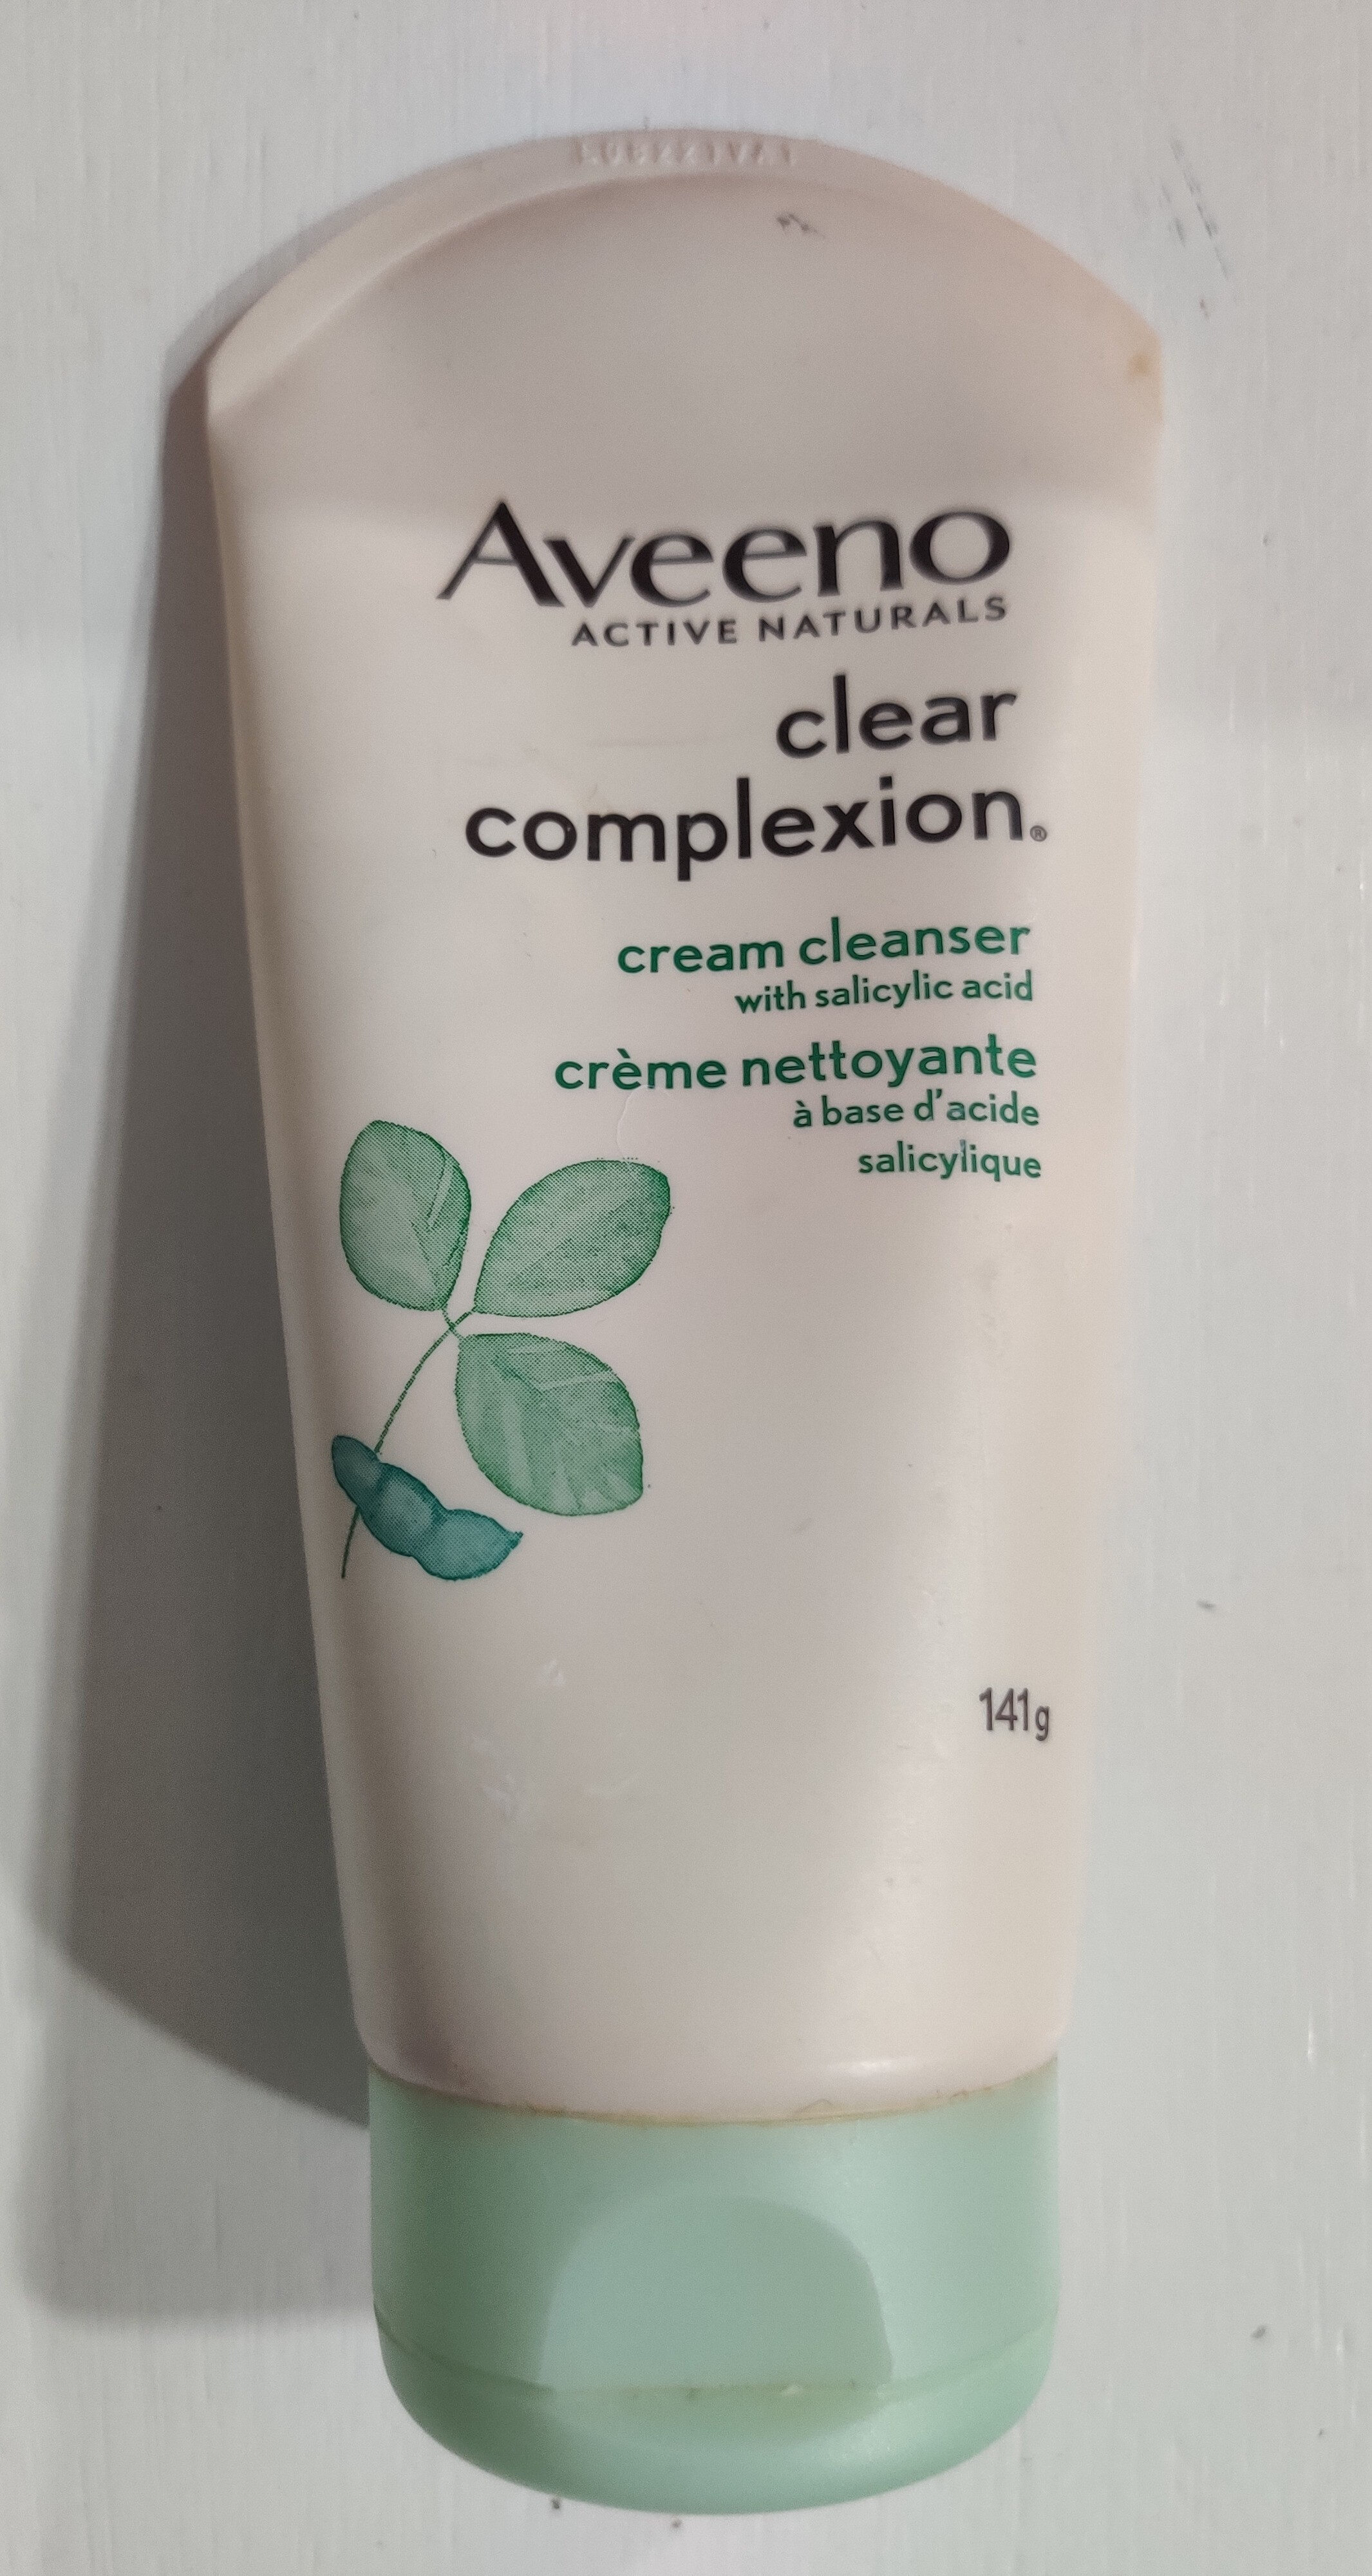 Aveeno clear completion cream cleanser - Продукт - en